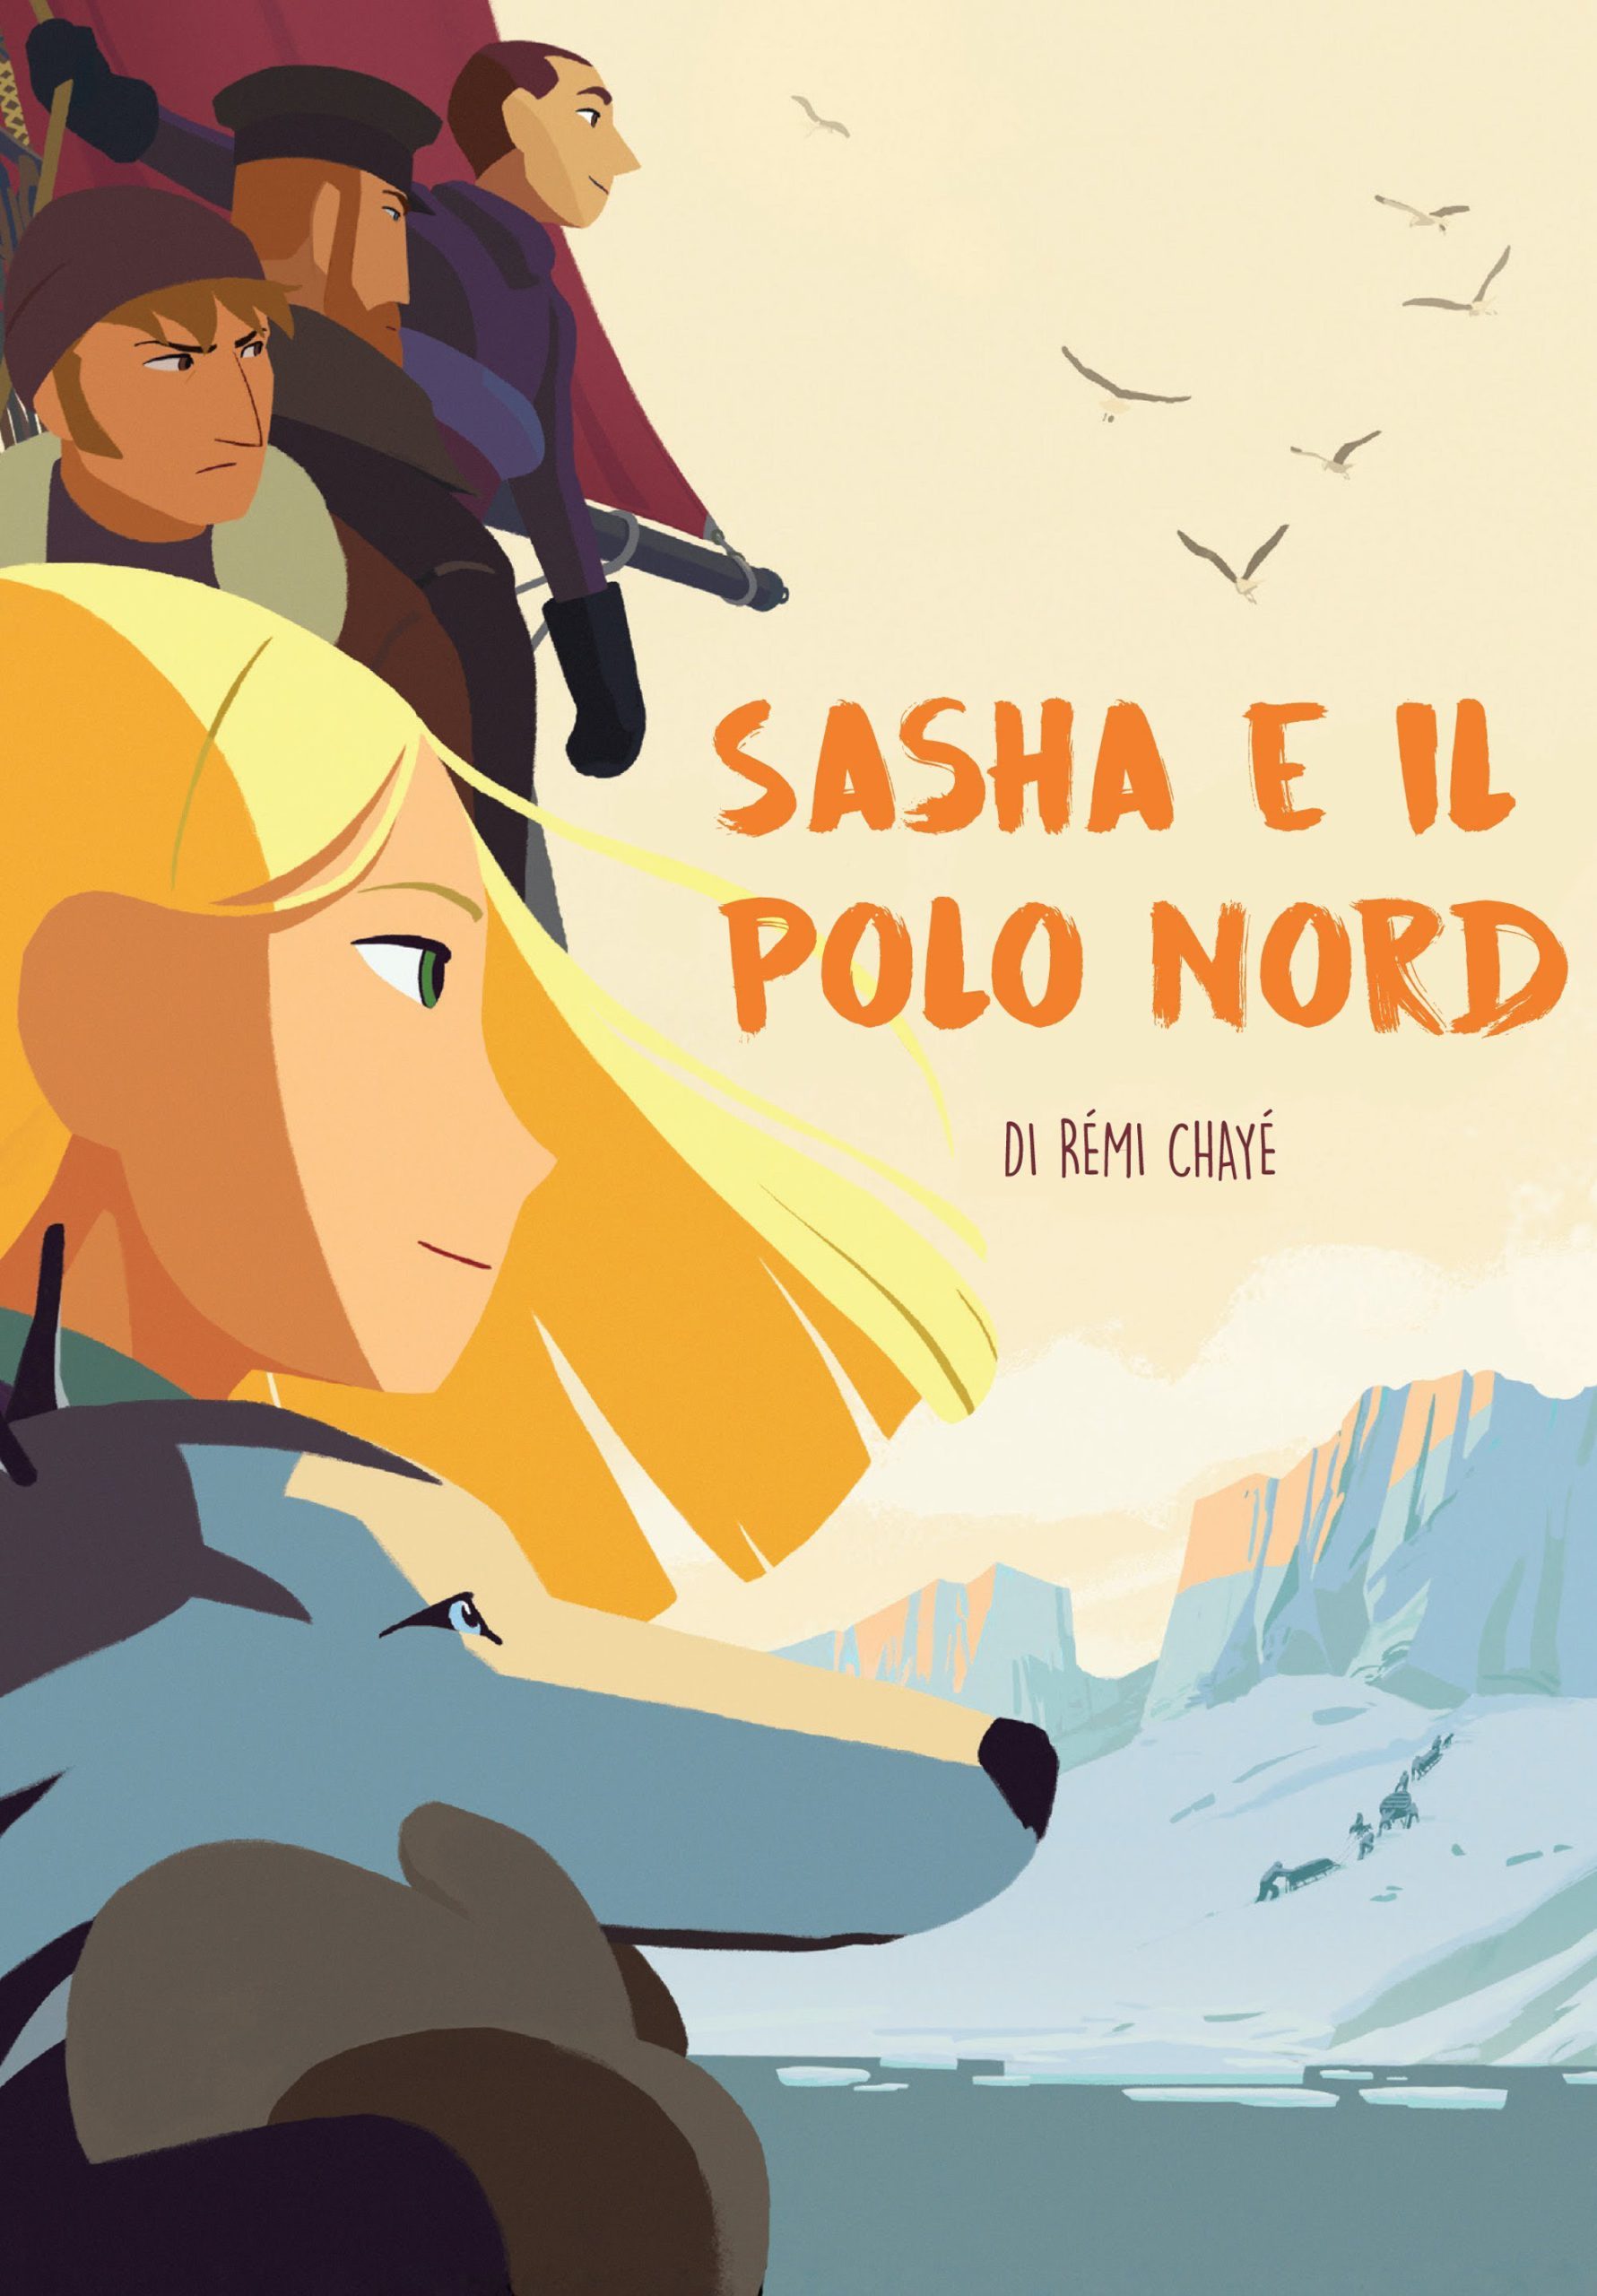 Sasha e il Polo Nord [HD] (2017)